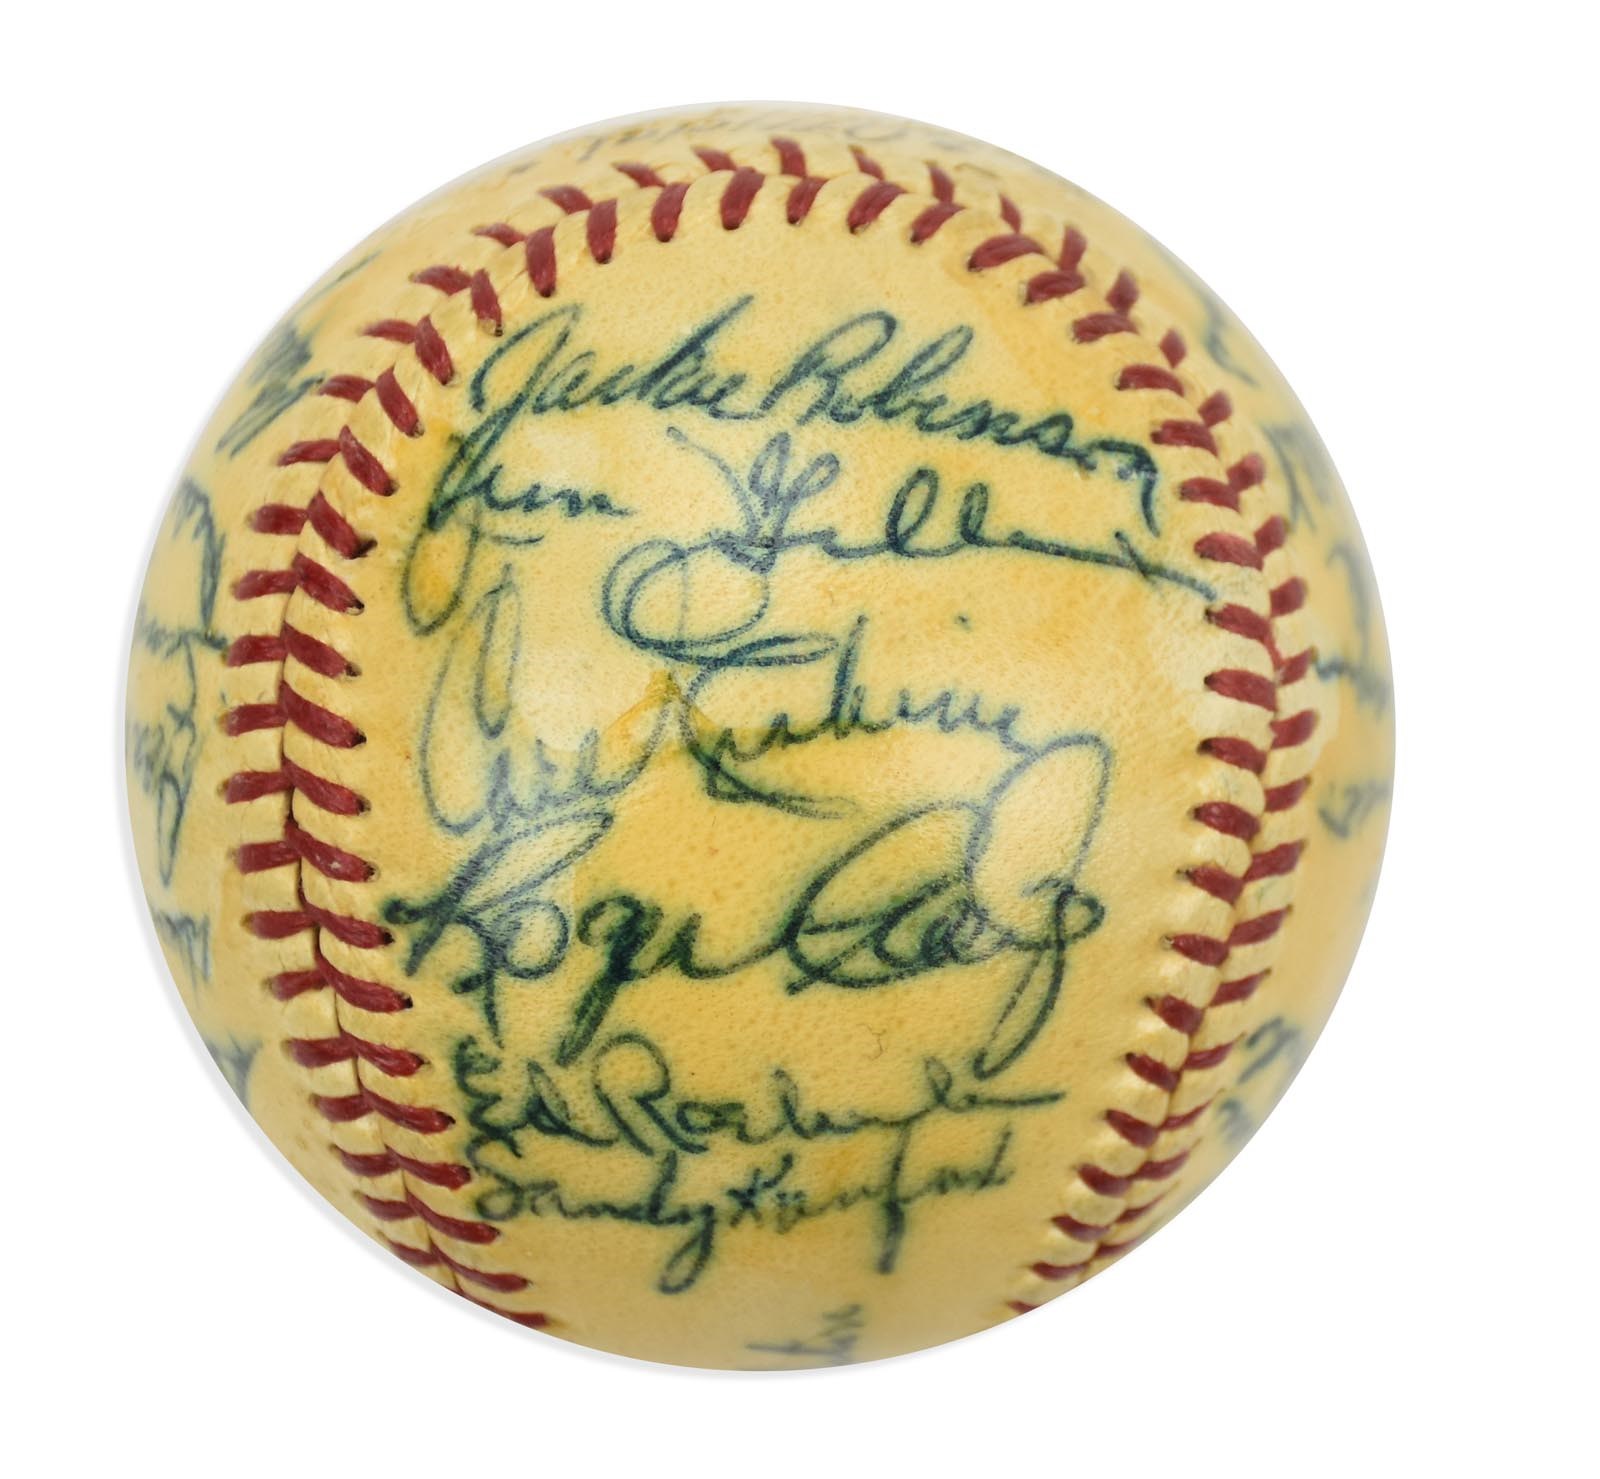 Jackie Robinson & Brooklyn Dodgers - 1955 World Champion Brooklyn Dodgers Team Signed Baseball (PSA)